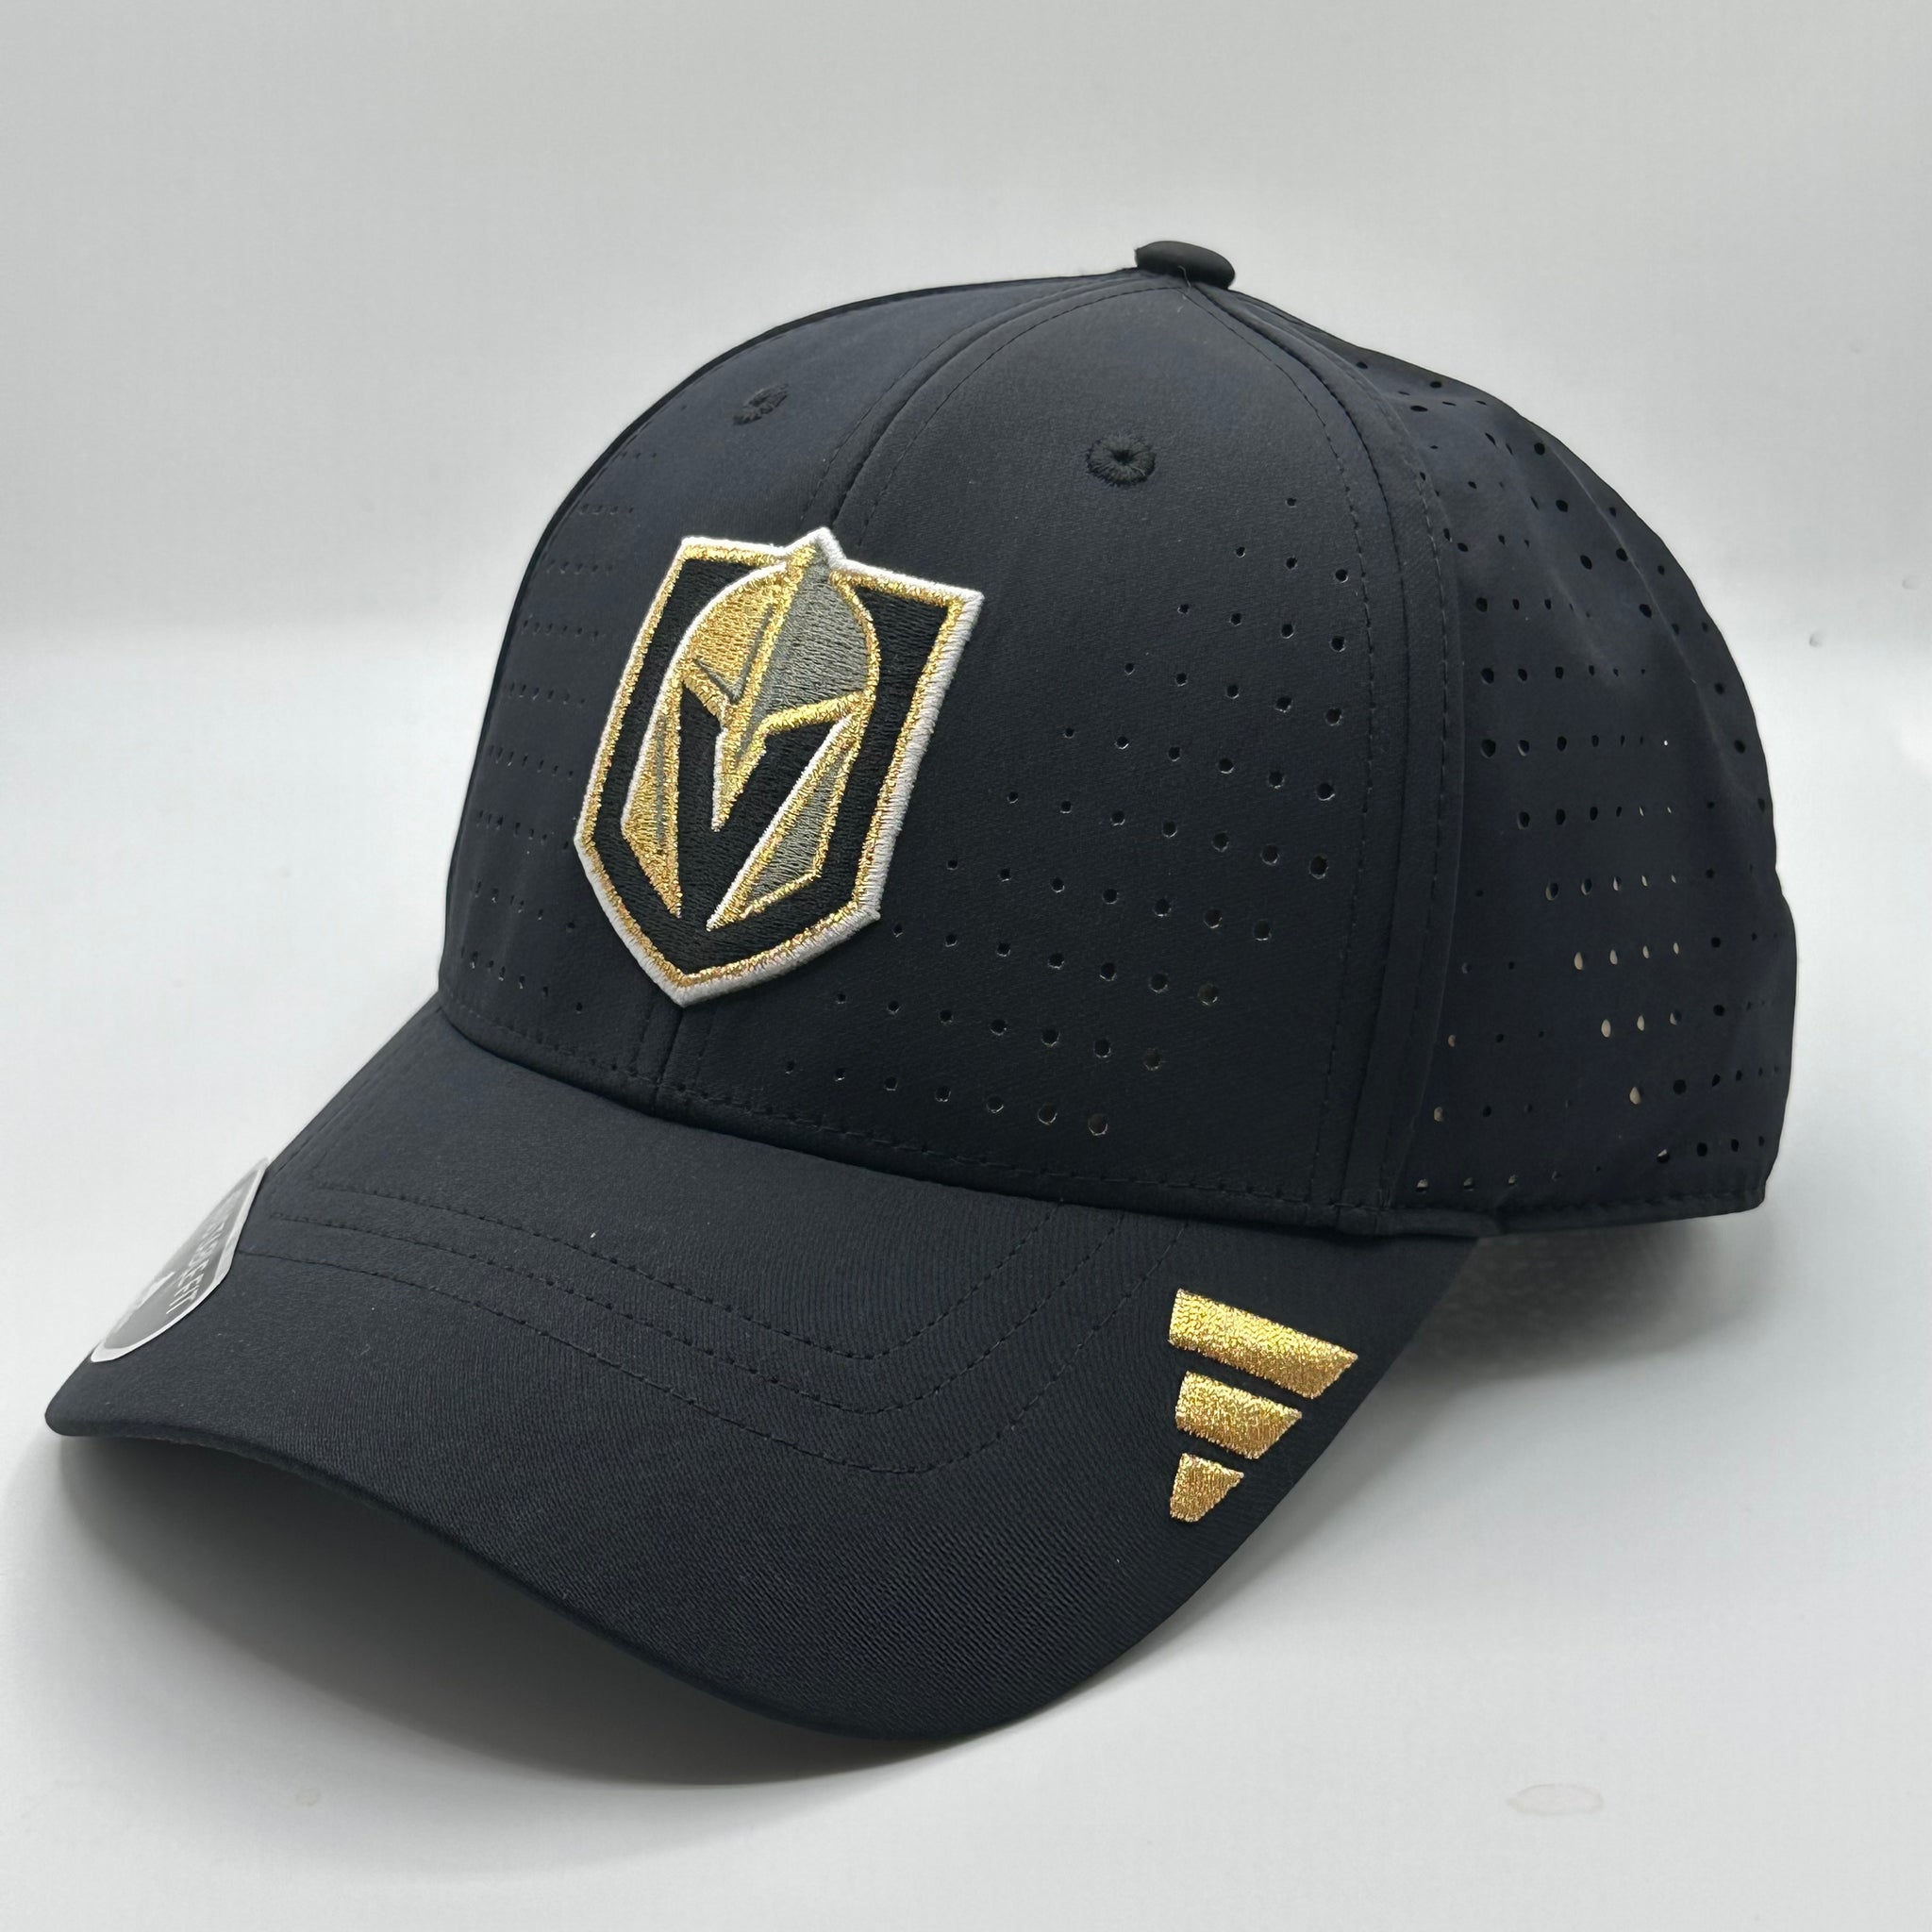 Vegas Golden Knights Dri-Fit Performance Hat - Black